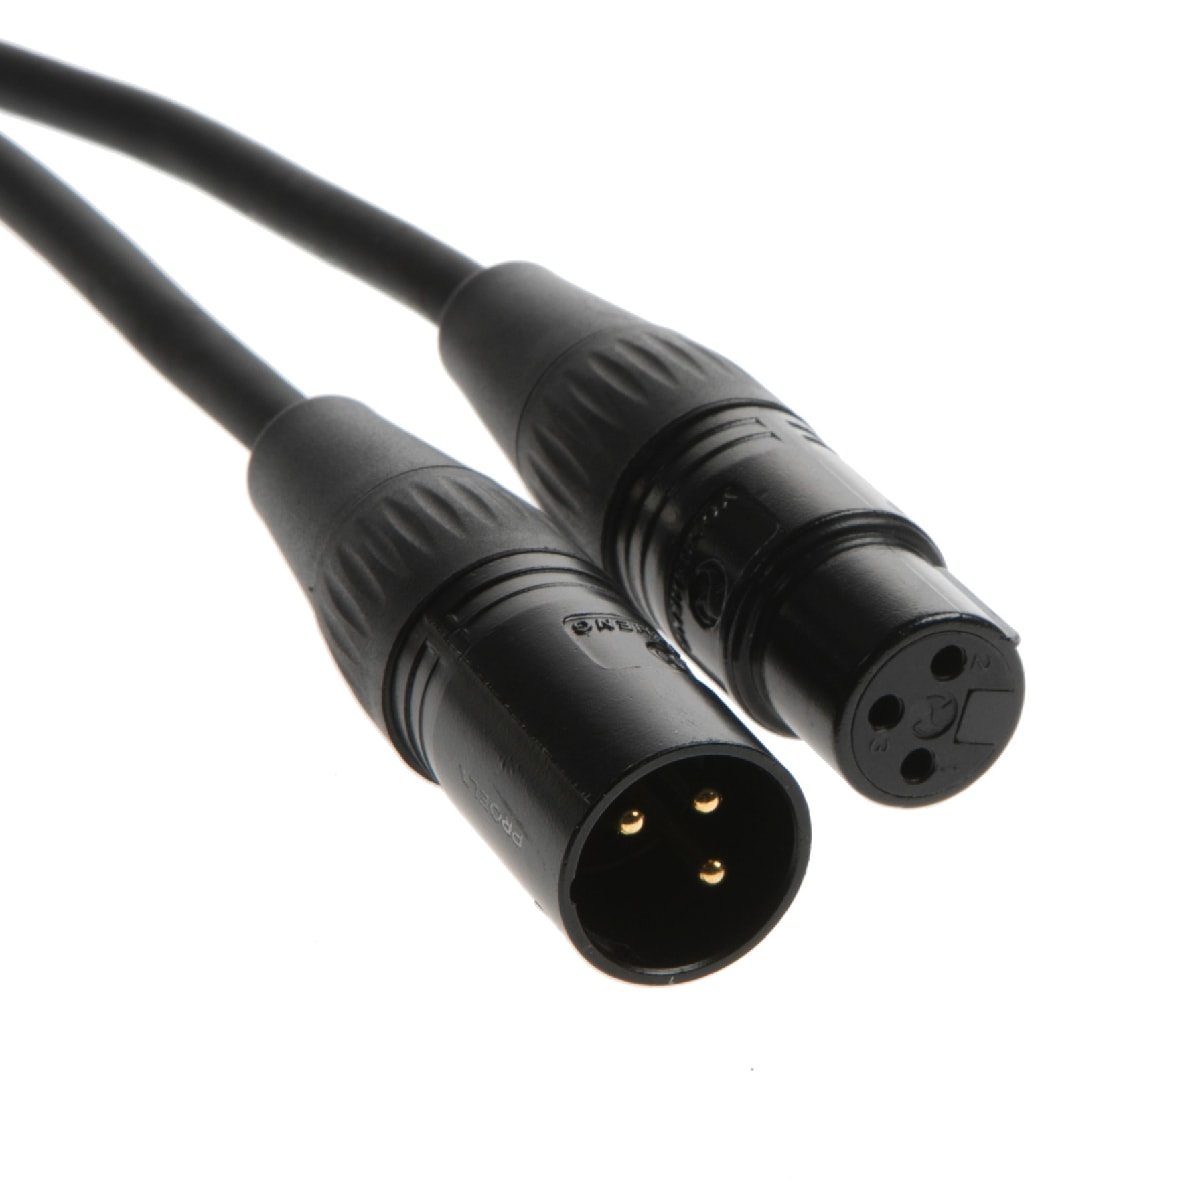  XLR cable (10m)